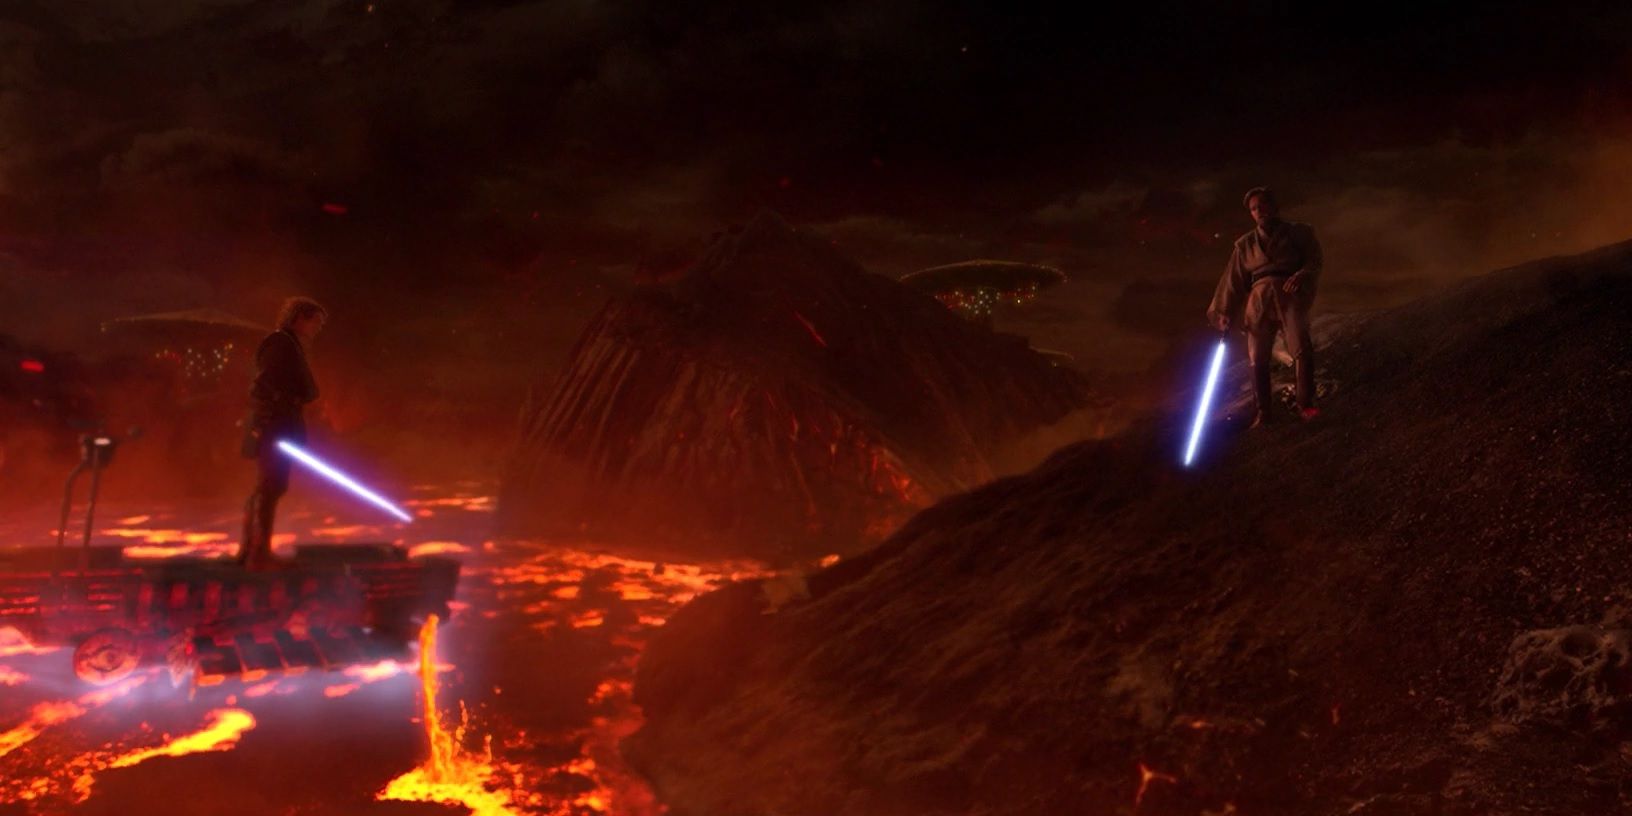 Anakin and Obi-Wan's duel on Mustafar